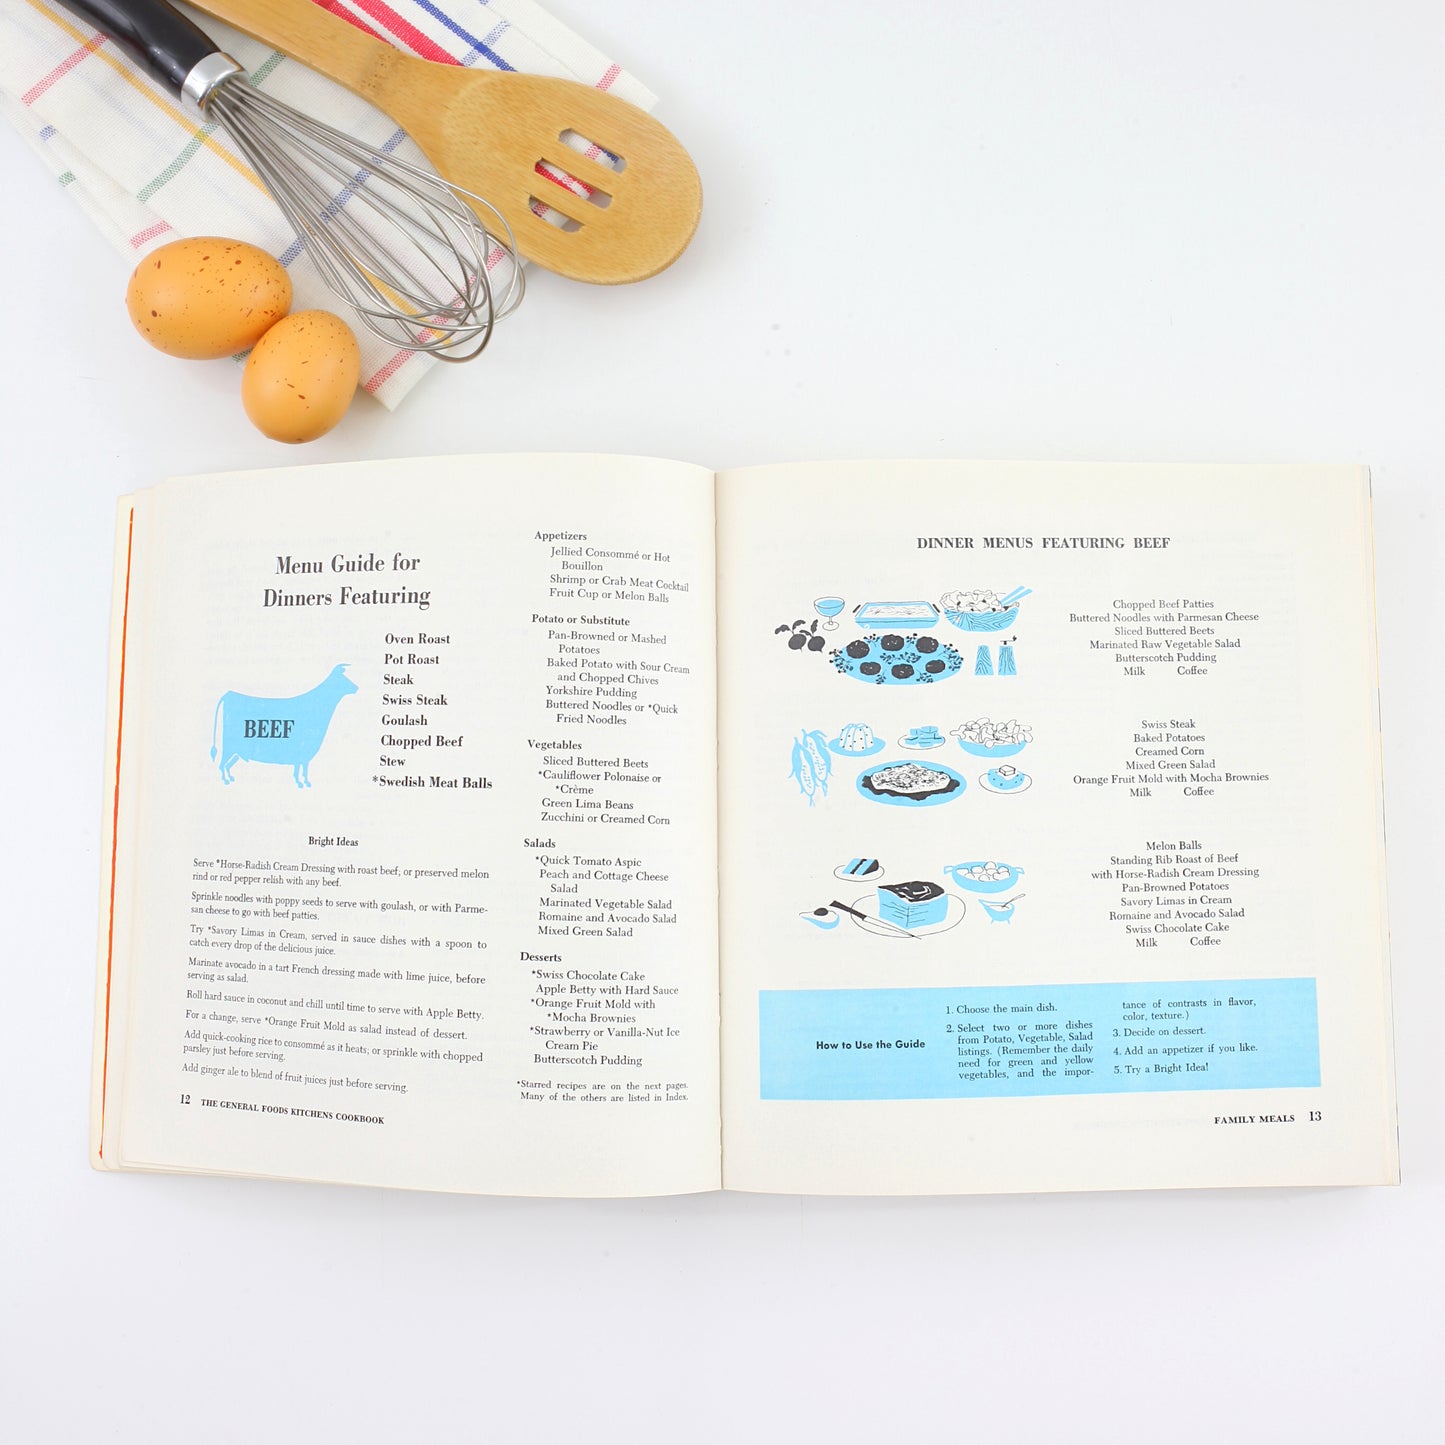 SOLD - The General Foods Kitchens Cookbook / Vintage 1959 Cookbook *Free US Shipping*